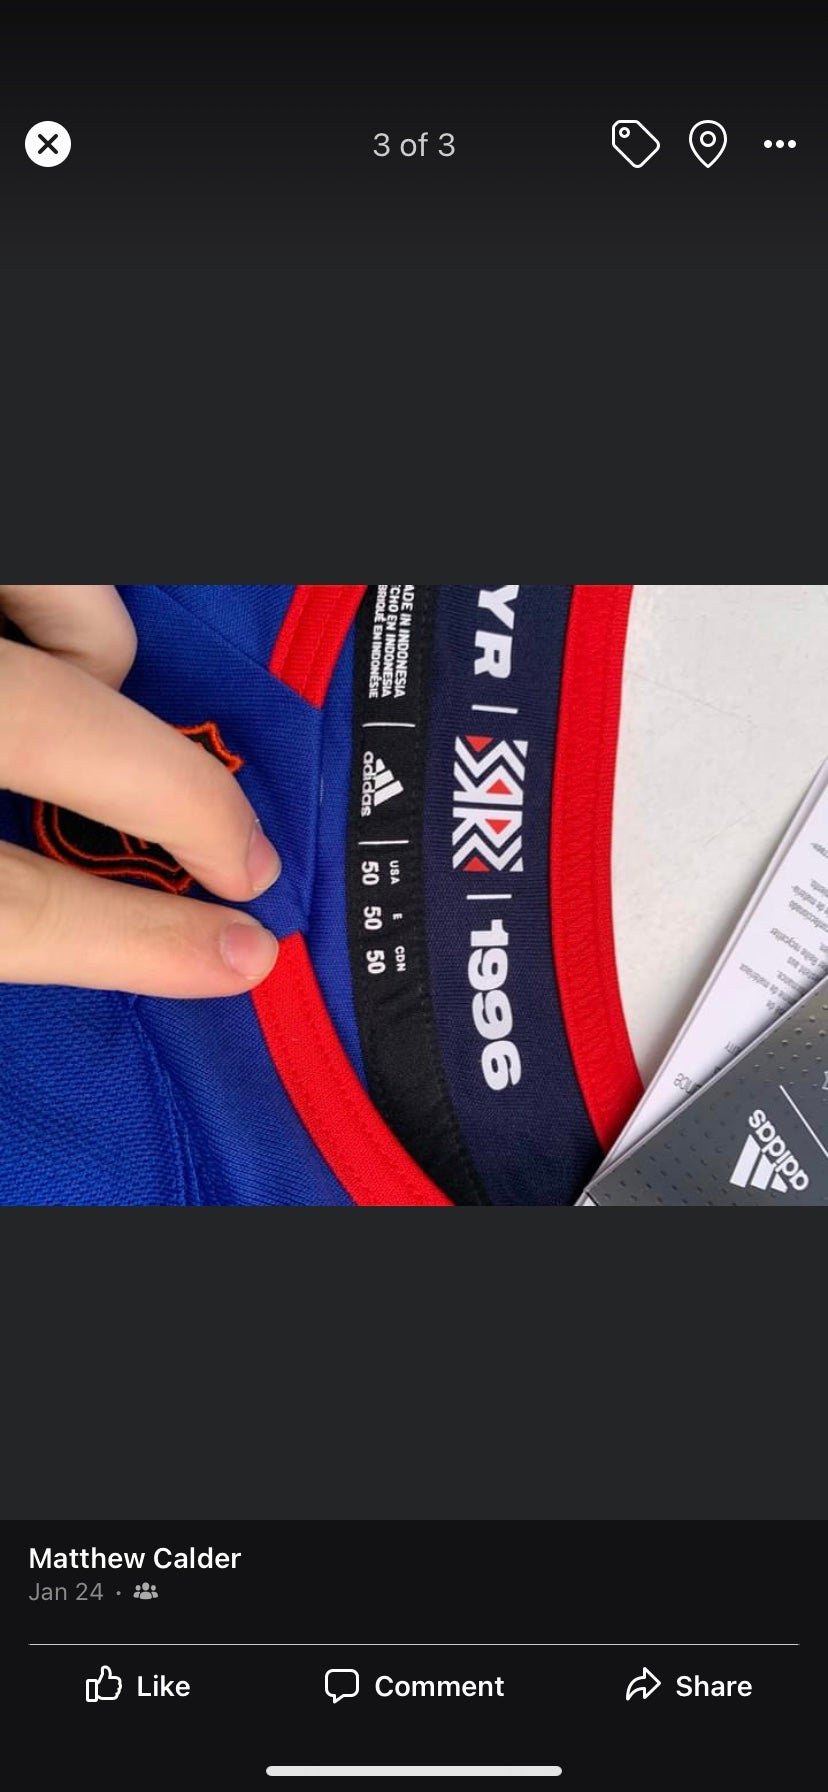 Authentic Adidas New York Rangers Mika Zibanejad Reverse Retro Jersey Size  50